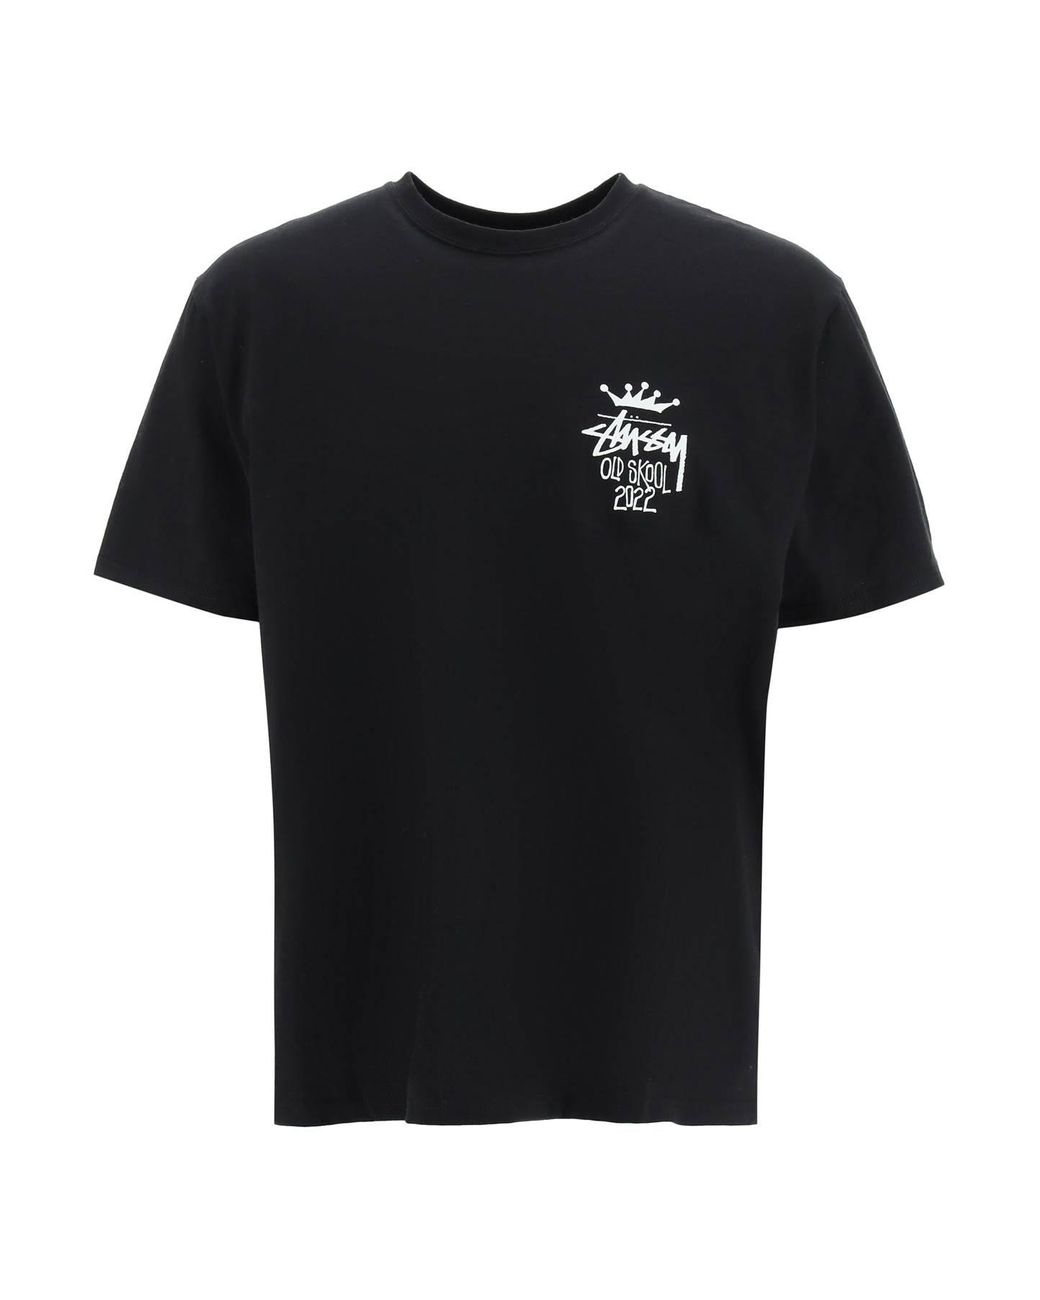 Stussy Old Skool 2022 T-shirt in Black for Men | Lyst